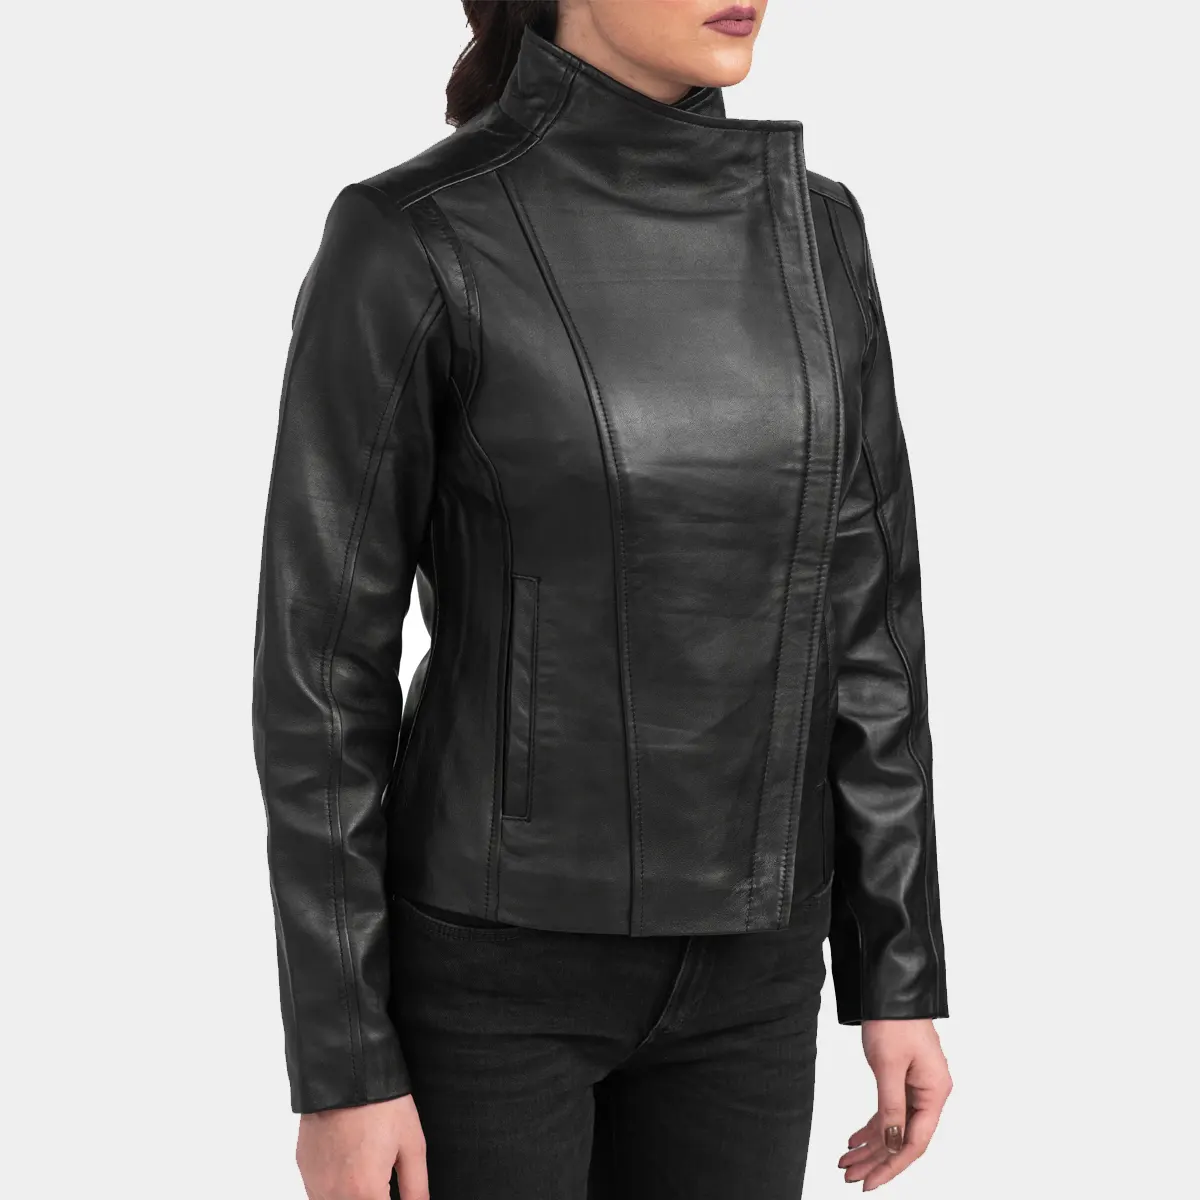 Black leather jacket for women